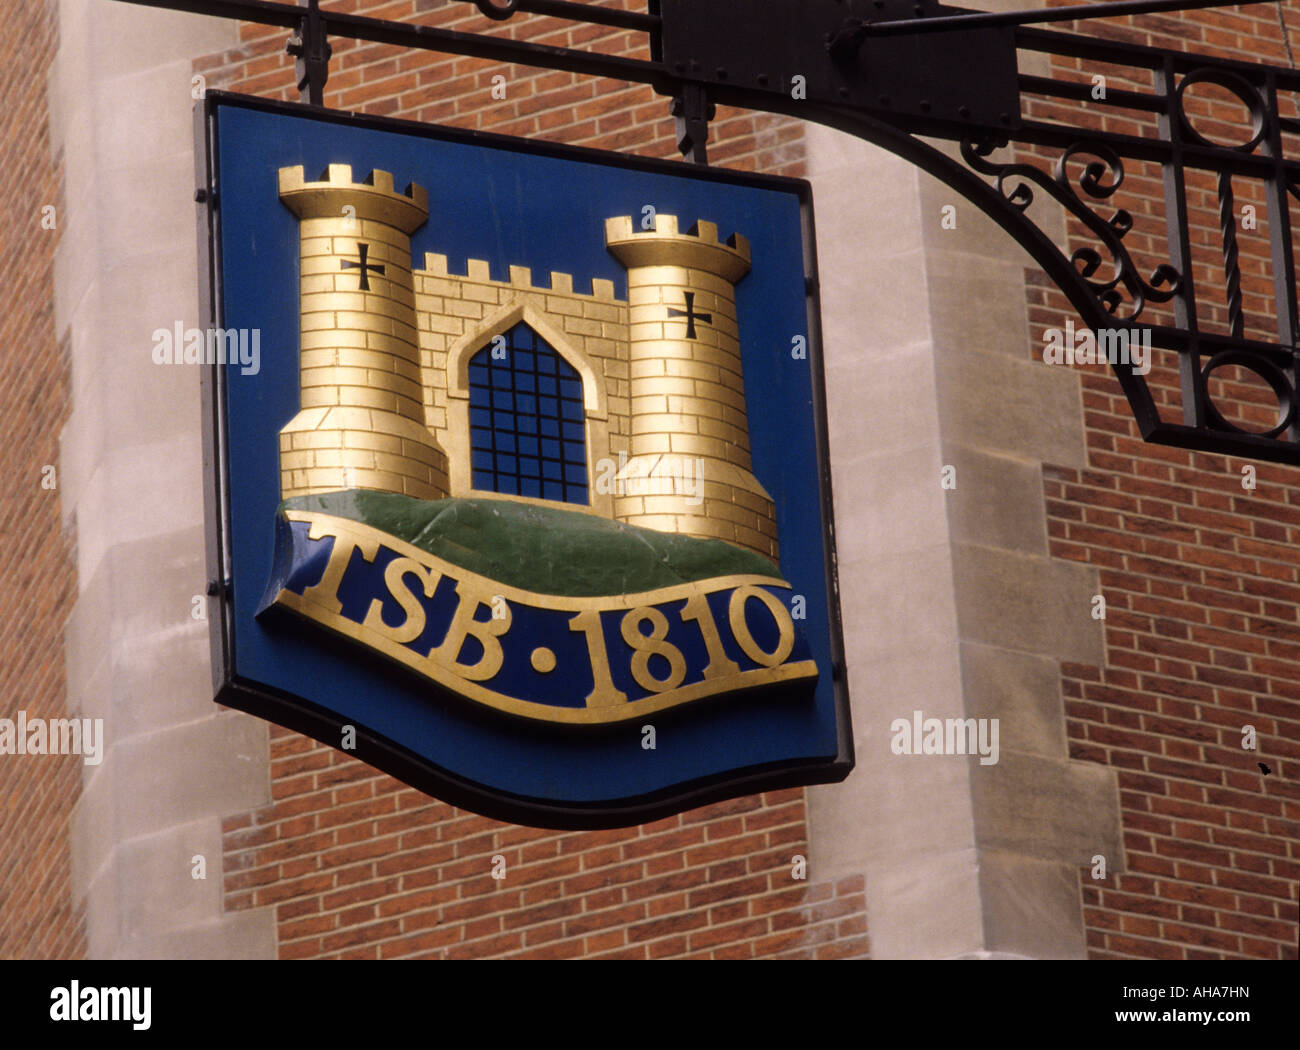 Lombard Street City of London TSB Bank street sign Stock Photo